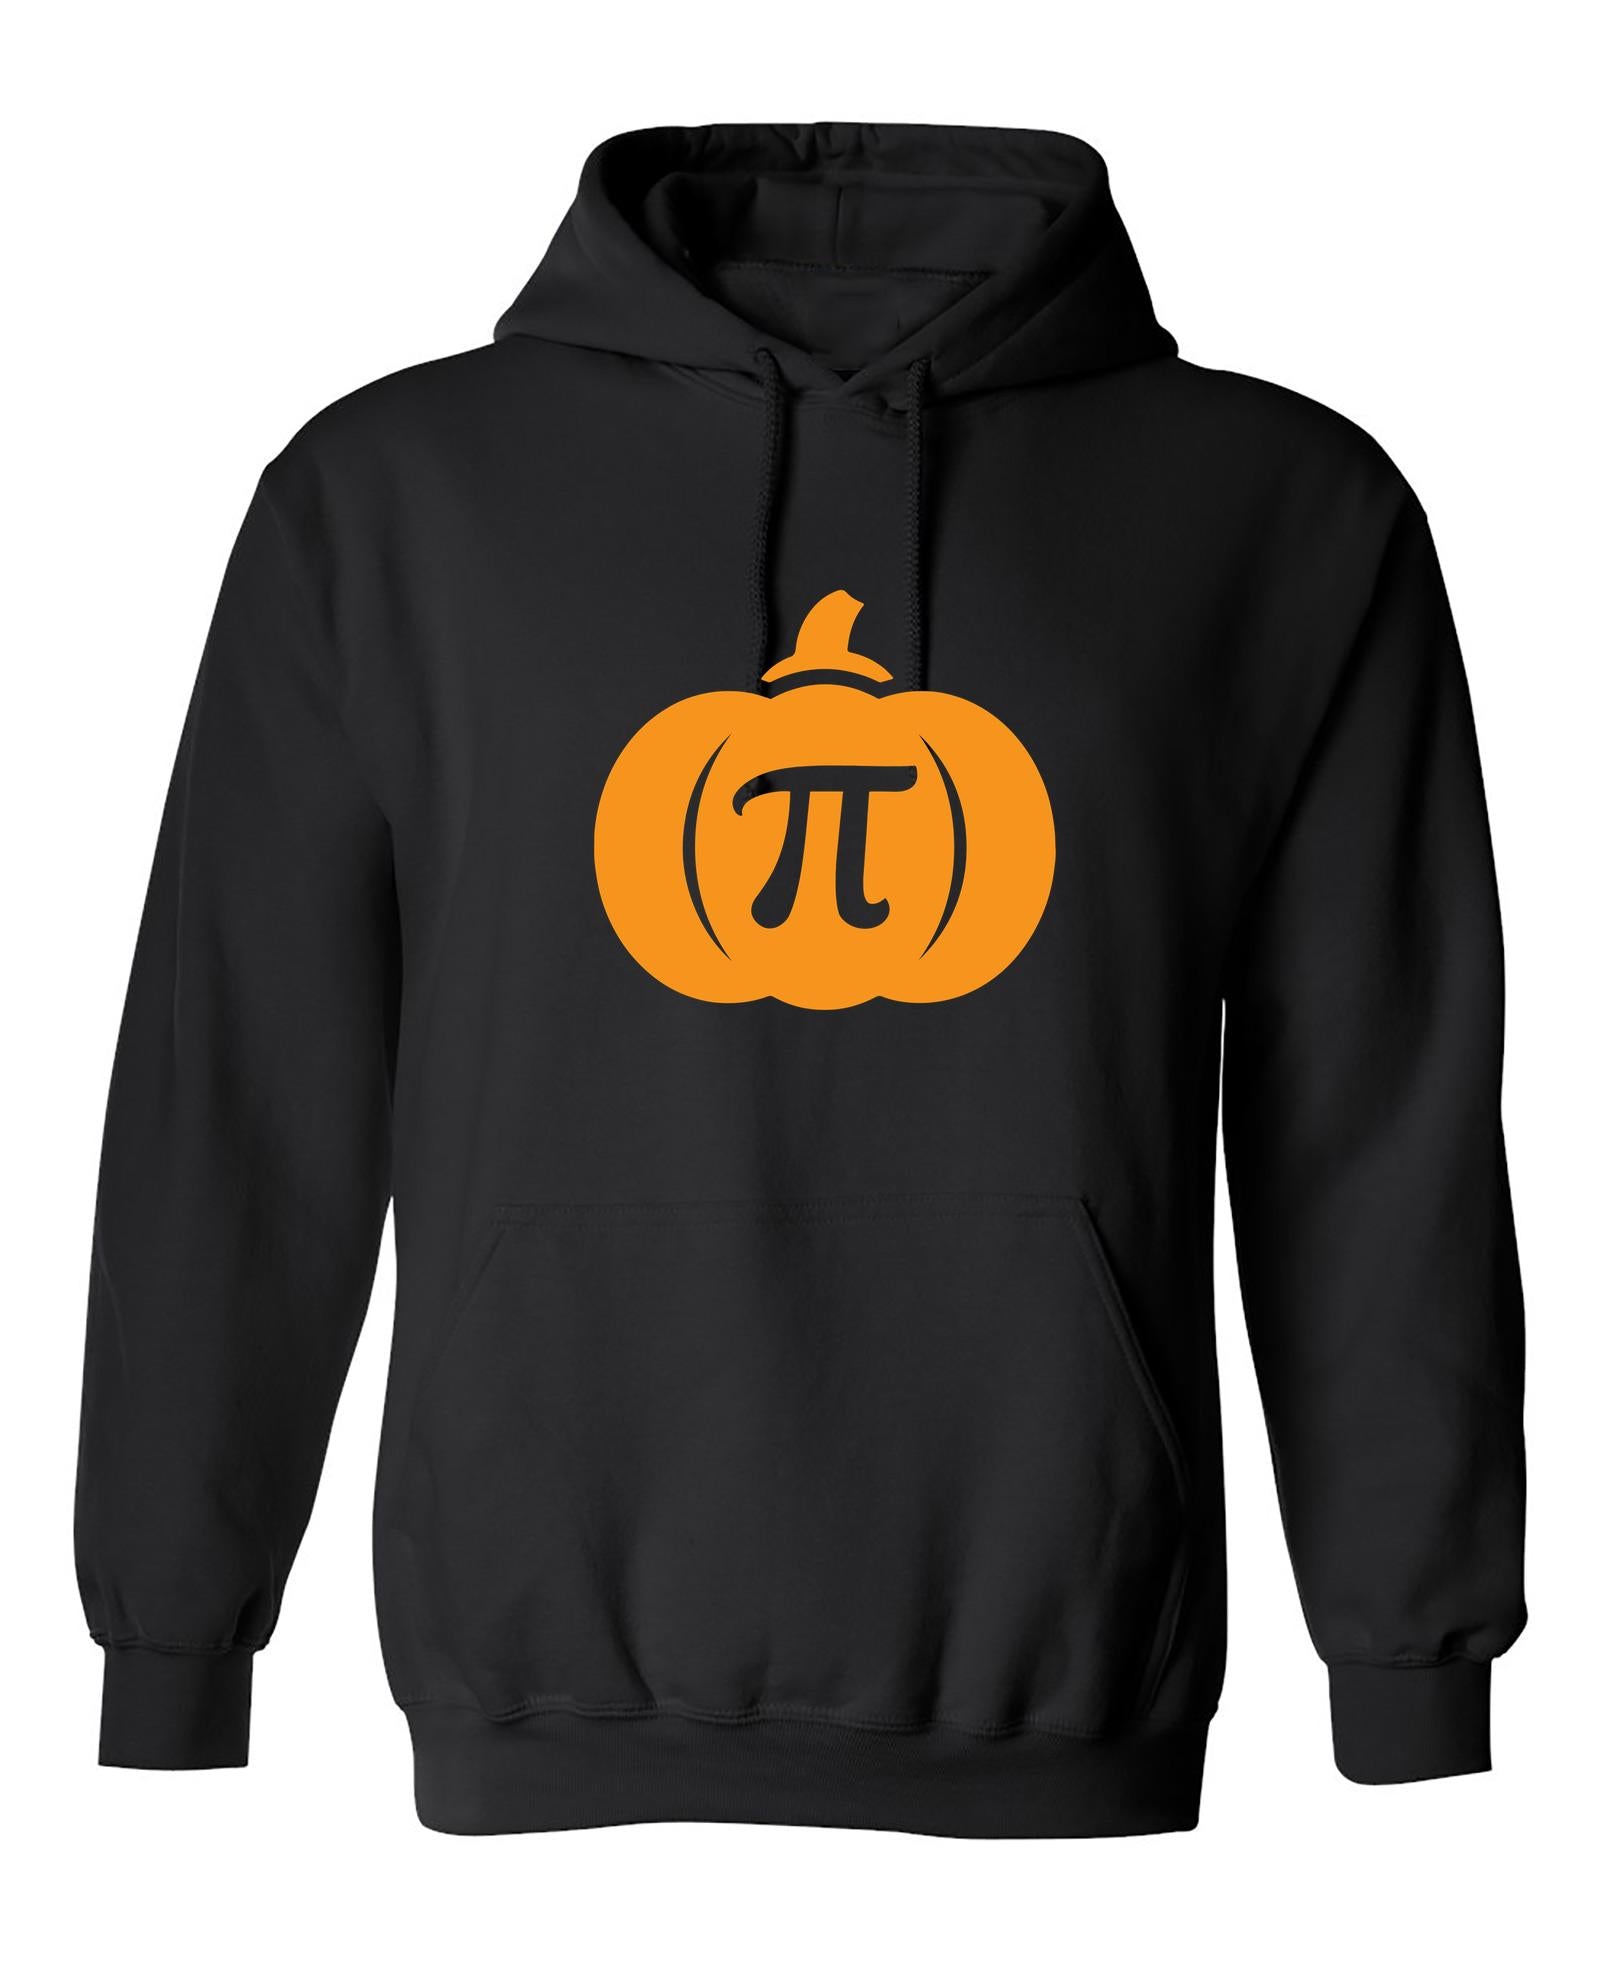 Funny T-Shirts design "Pumpkin Pie Tee"